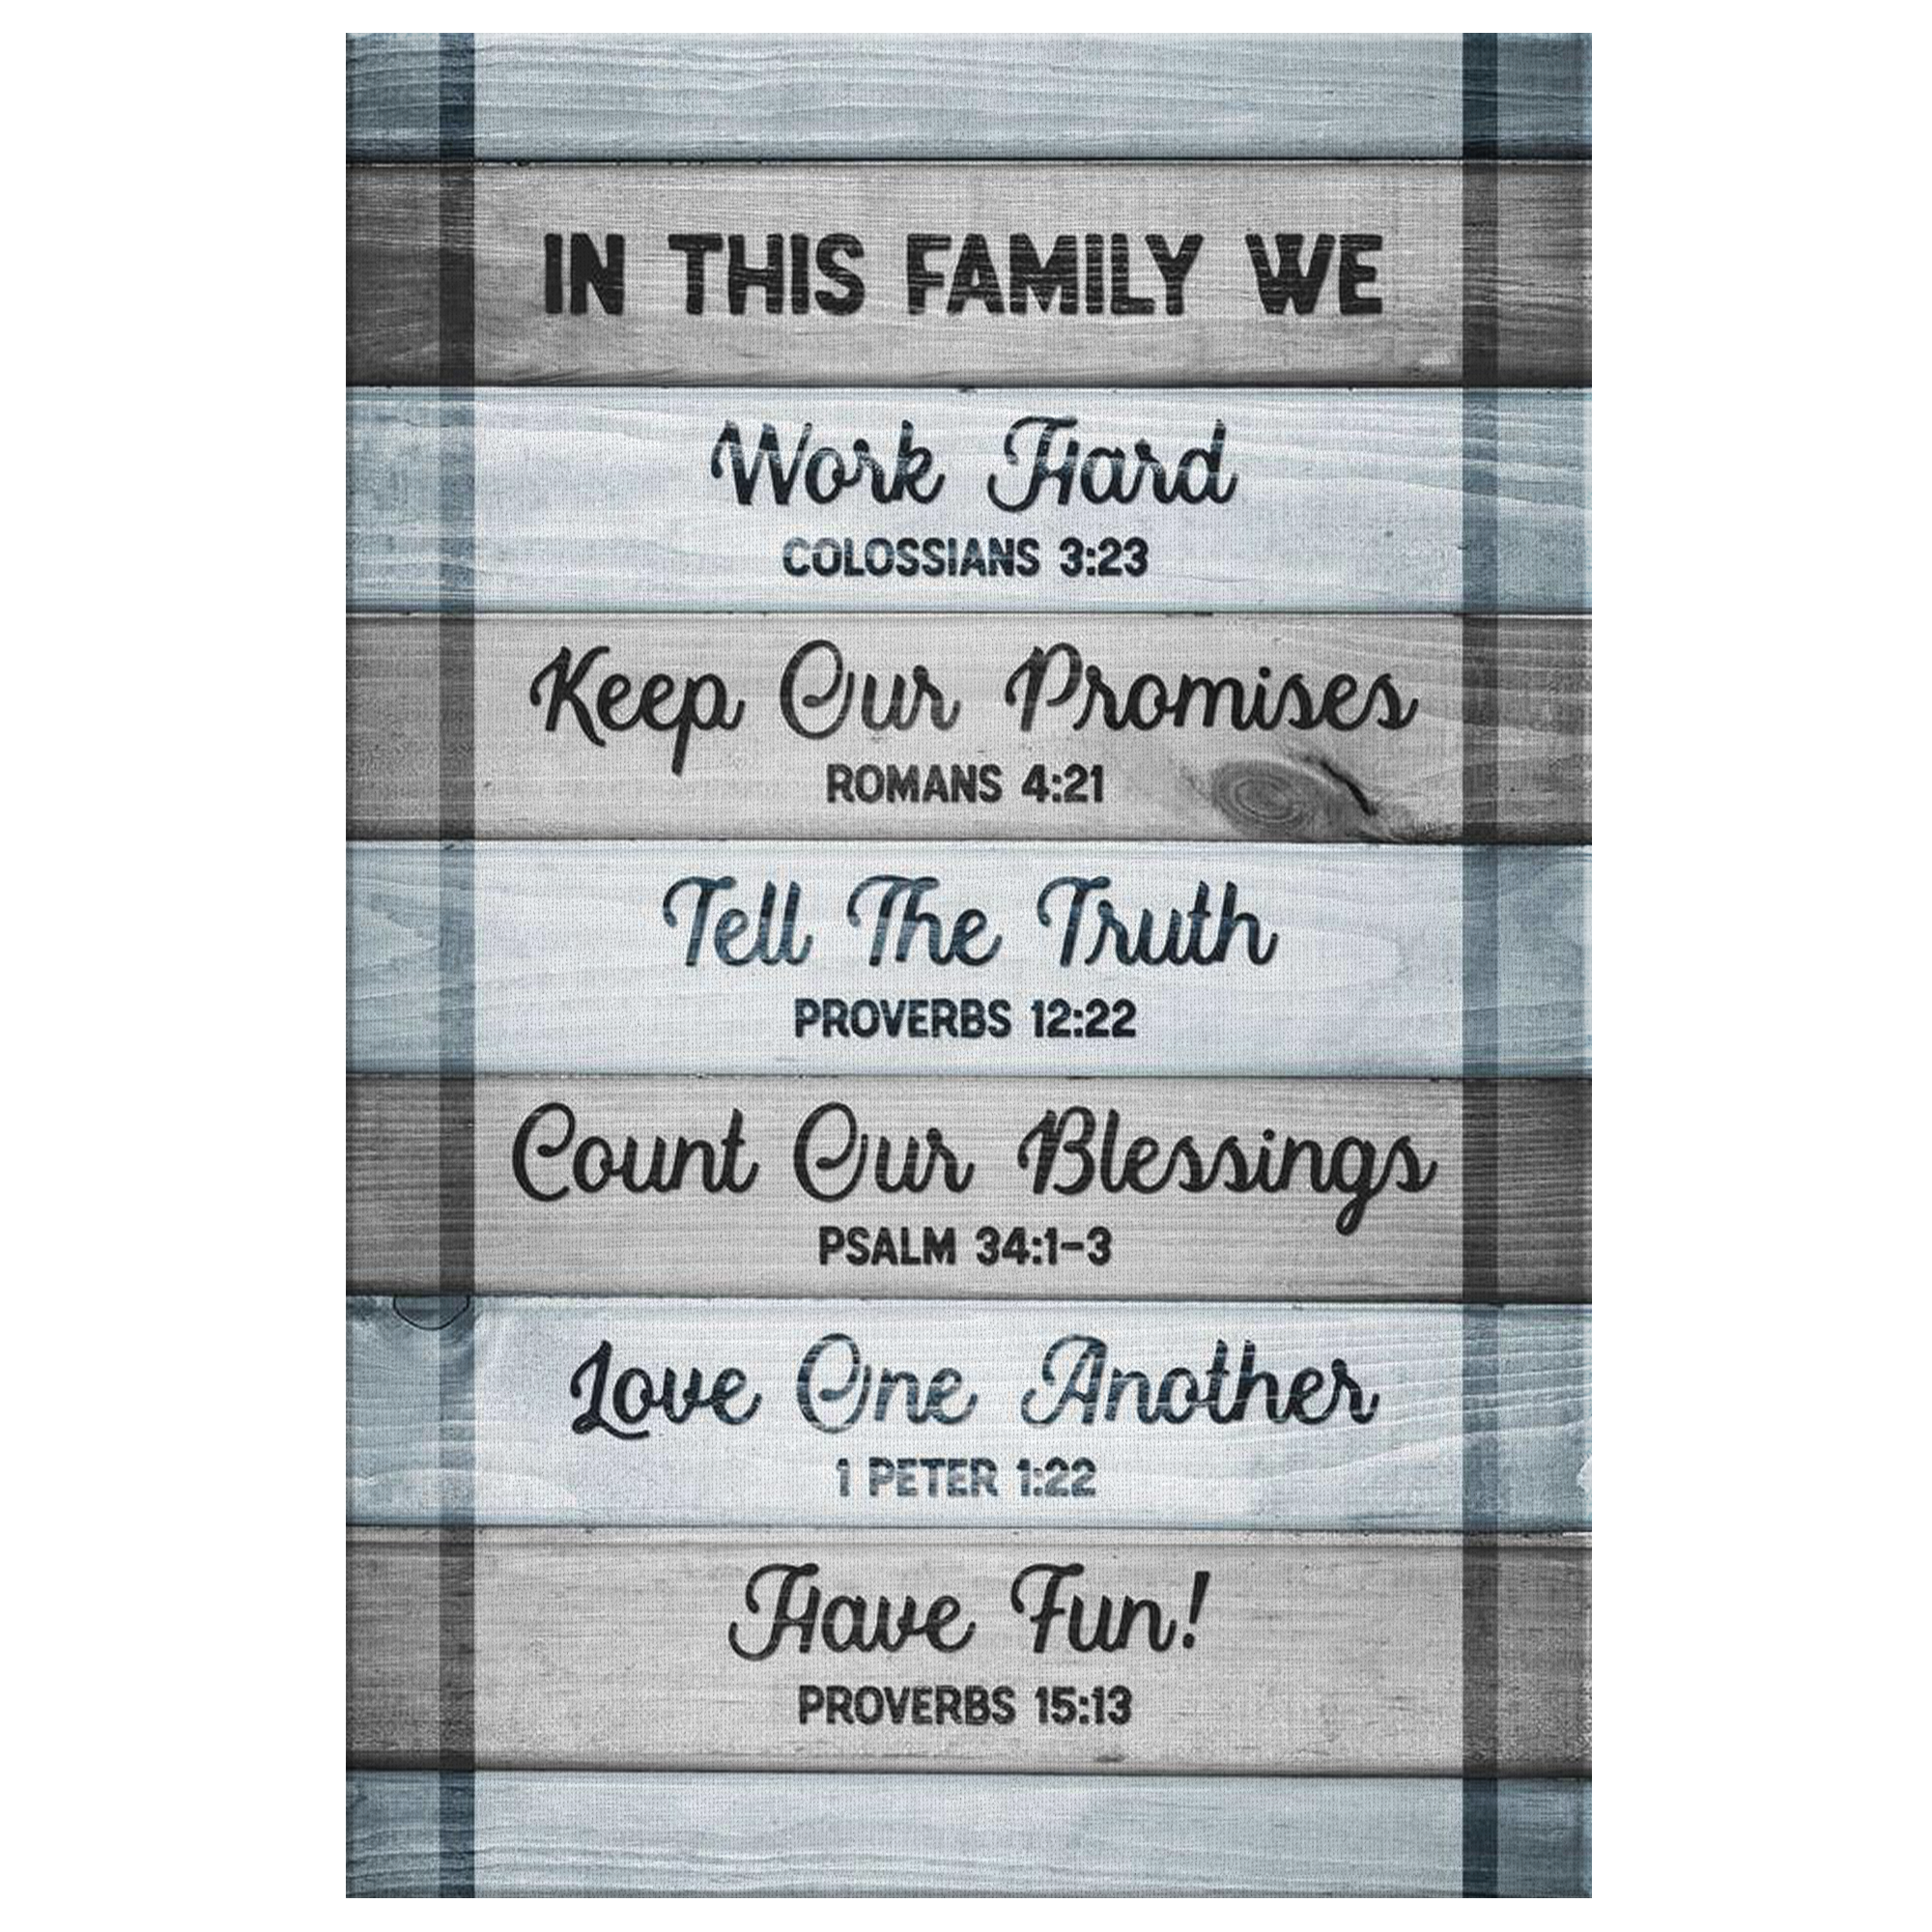 Familie Bild: Bible Verse About Family Love